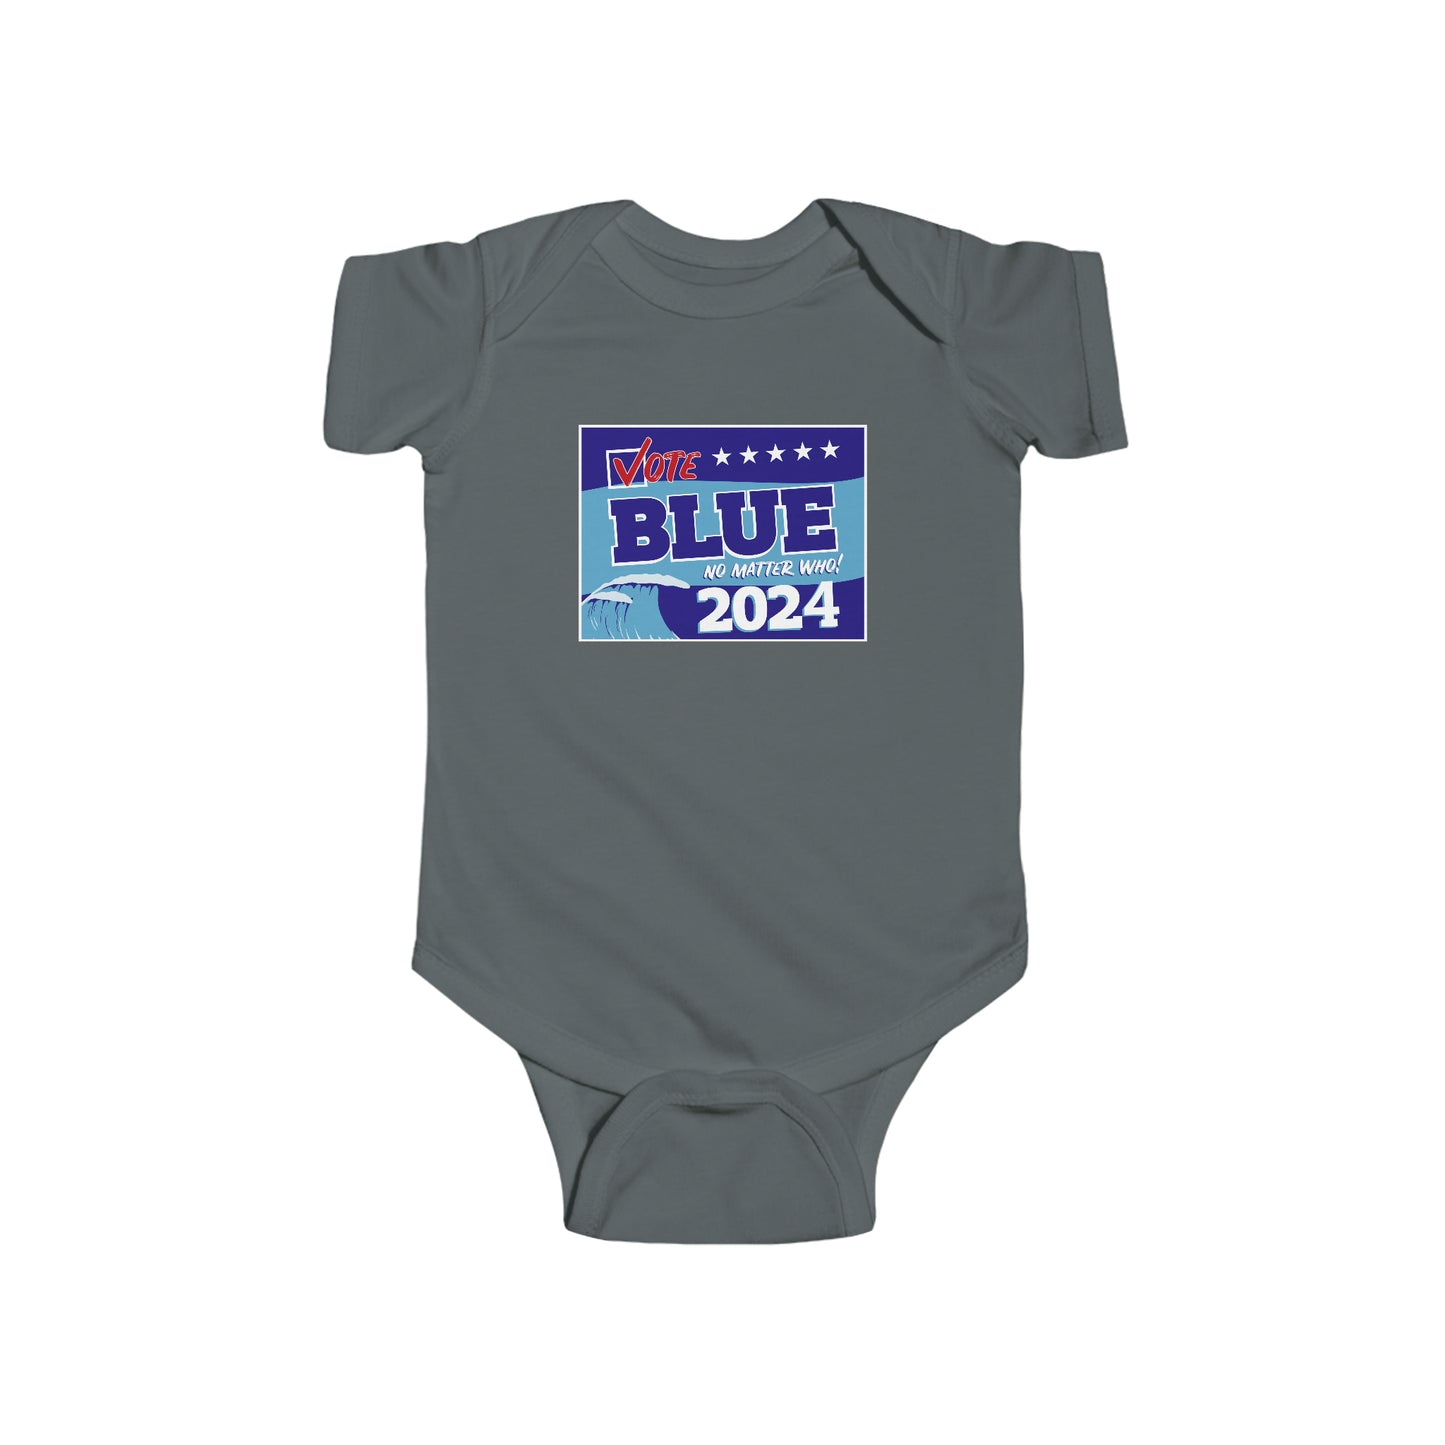 “Vote Blue No Matter Who, Blue Wave 2024” Infant Onesie